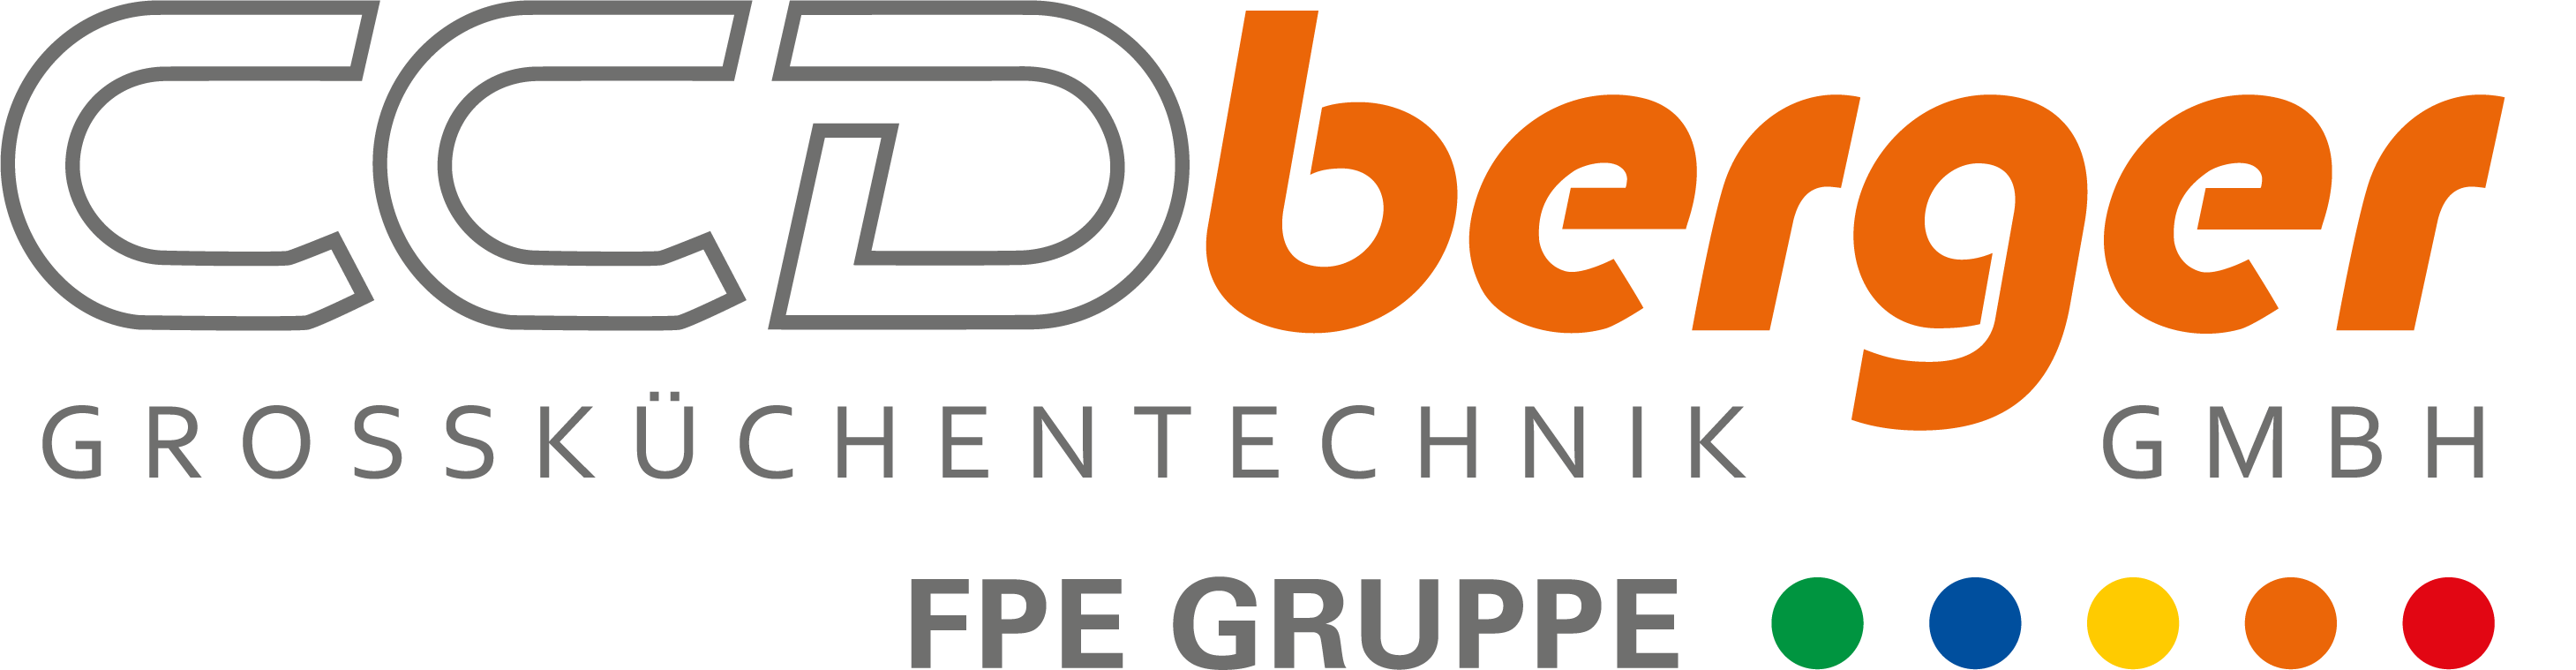 CCD Berger GmbH